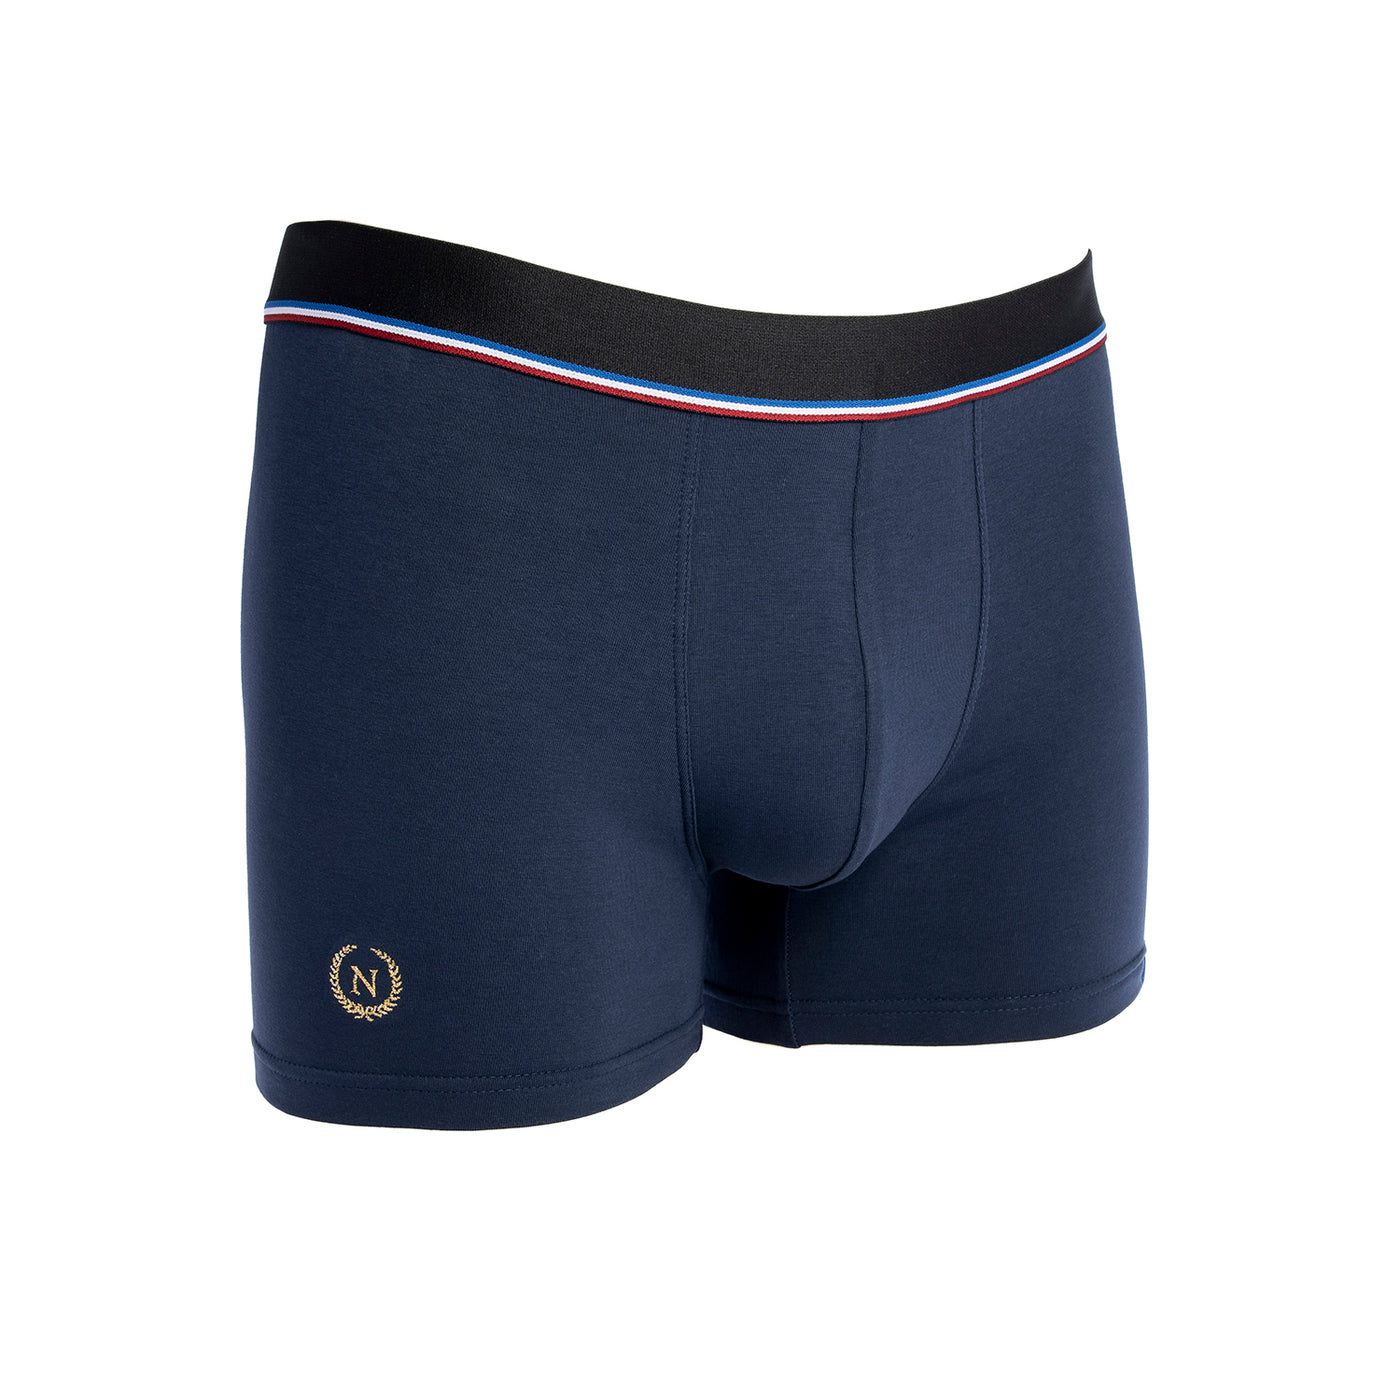 Navy blue Napoleon boxer shorts